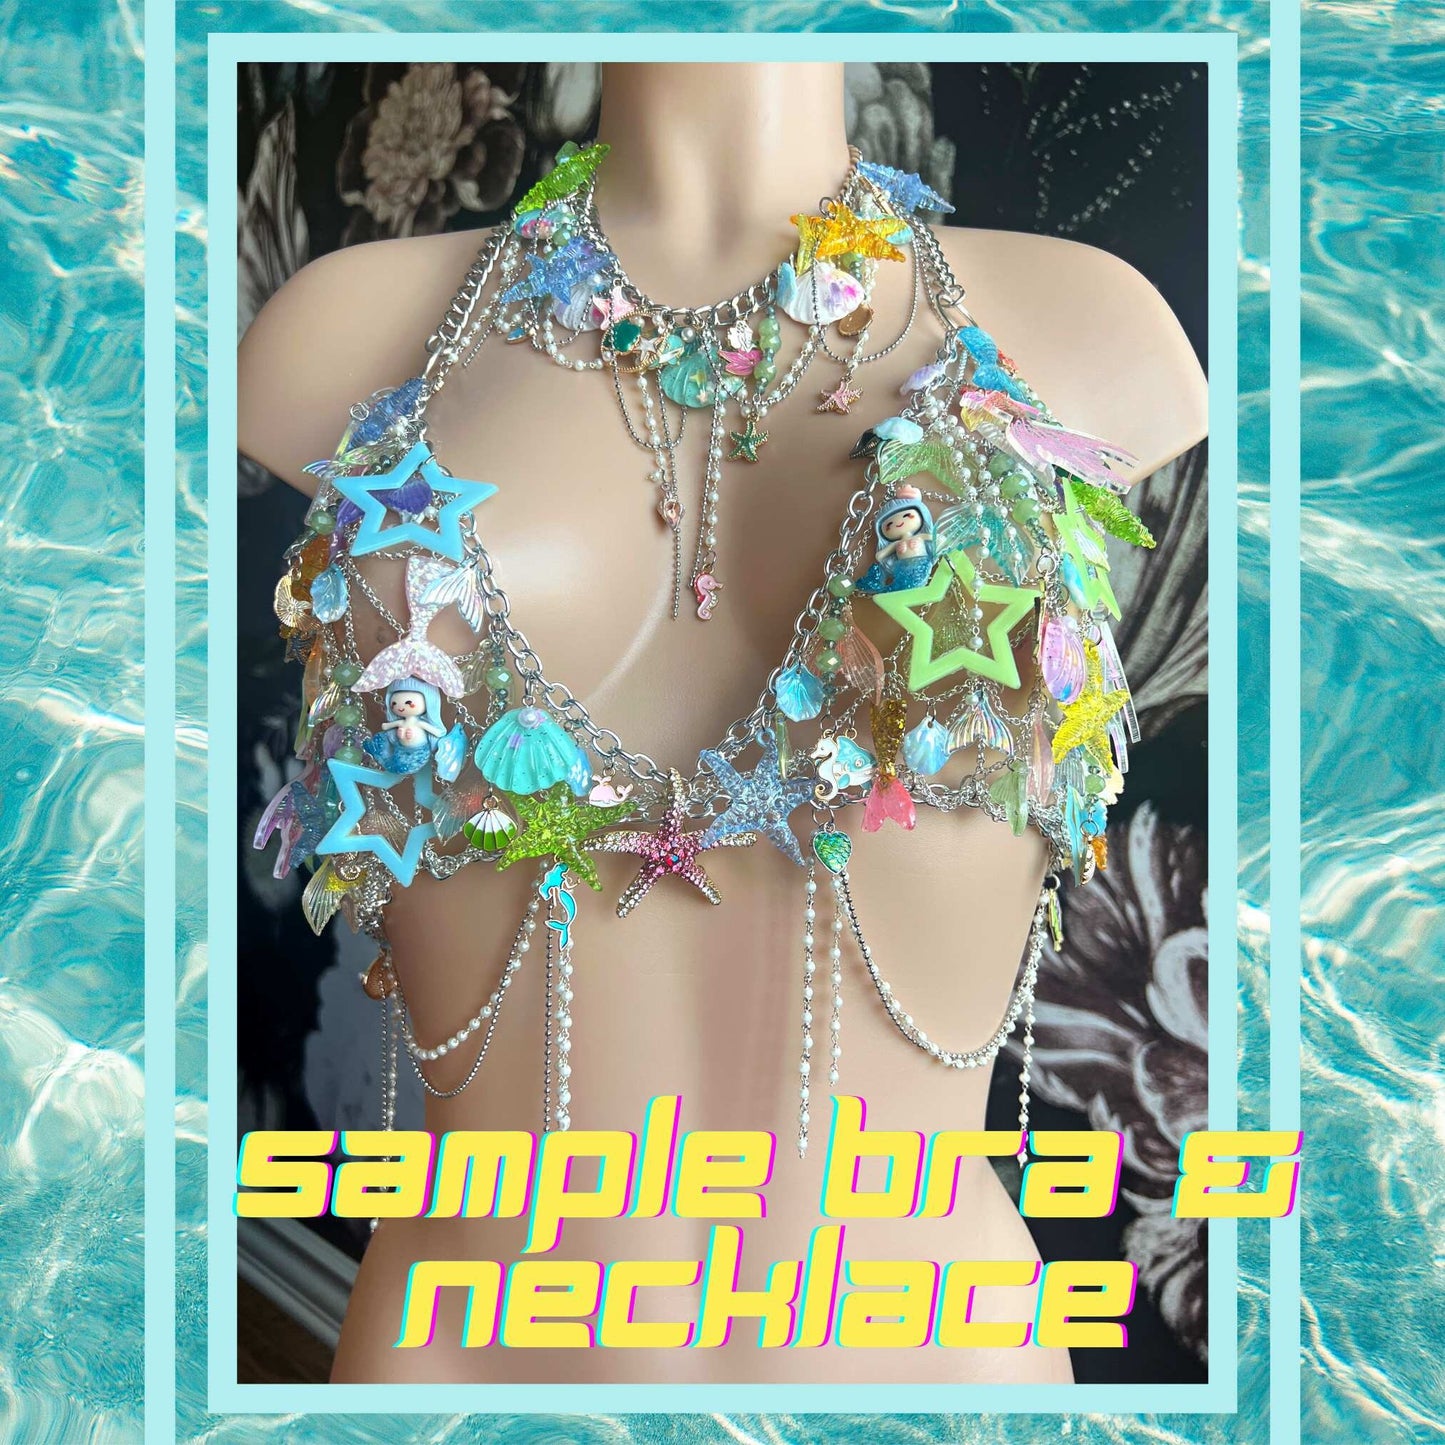 Mermaid Custom Chain Top Mermaid Charm Necklace Personalized Rave Outfit Mermaidcore Top With Ocean Charms Mermaid Costume Underwater Colors